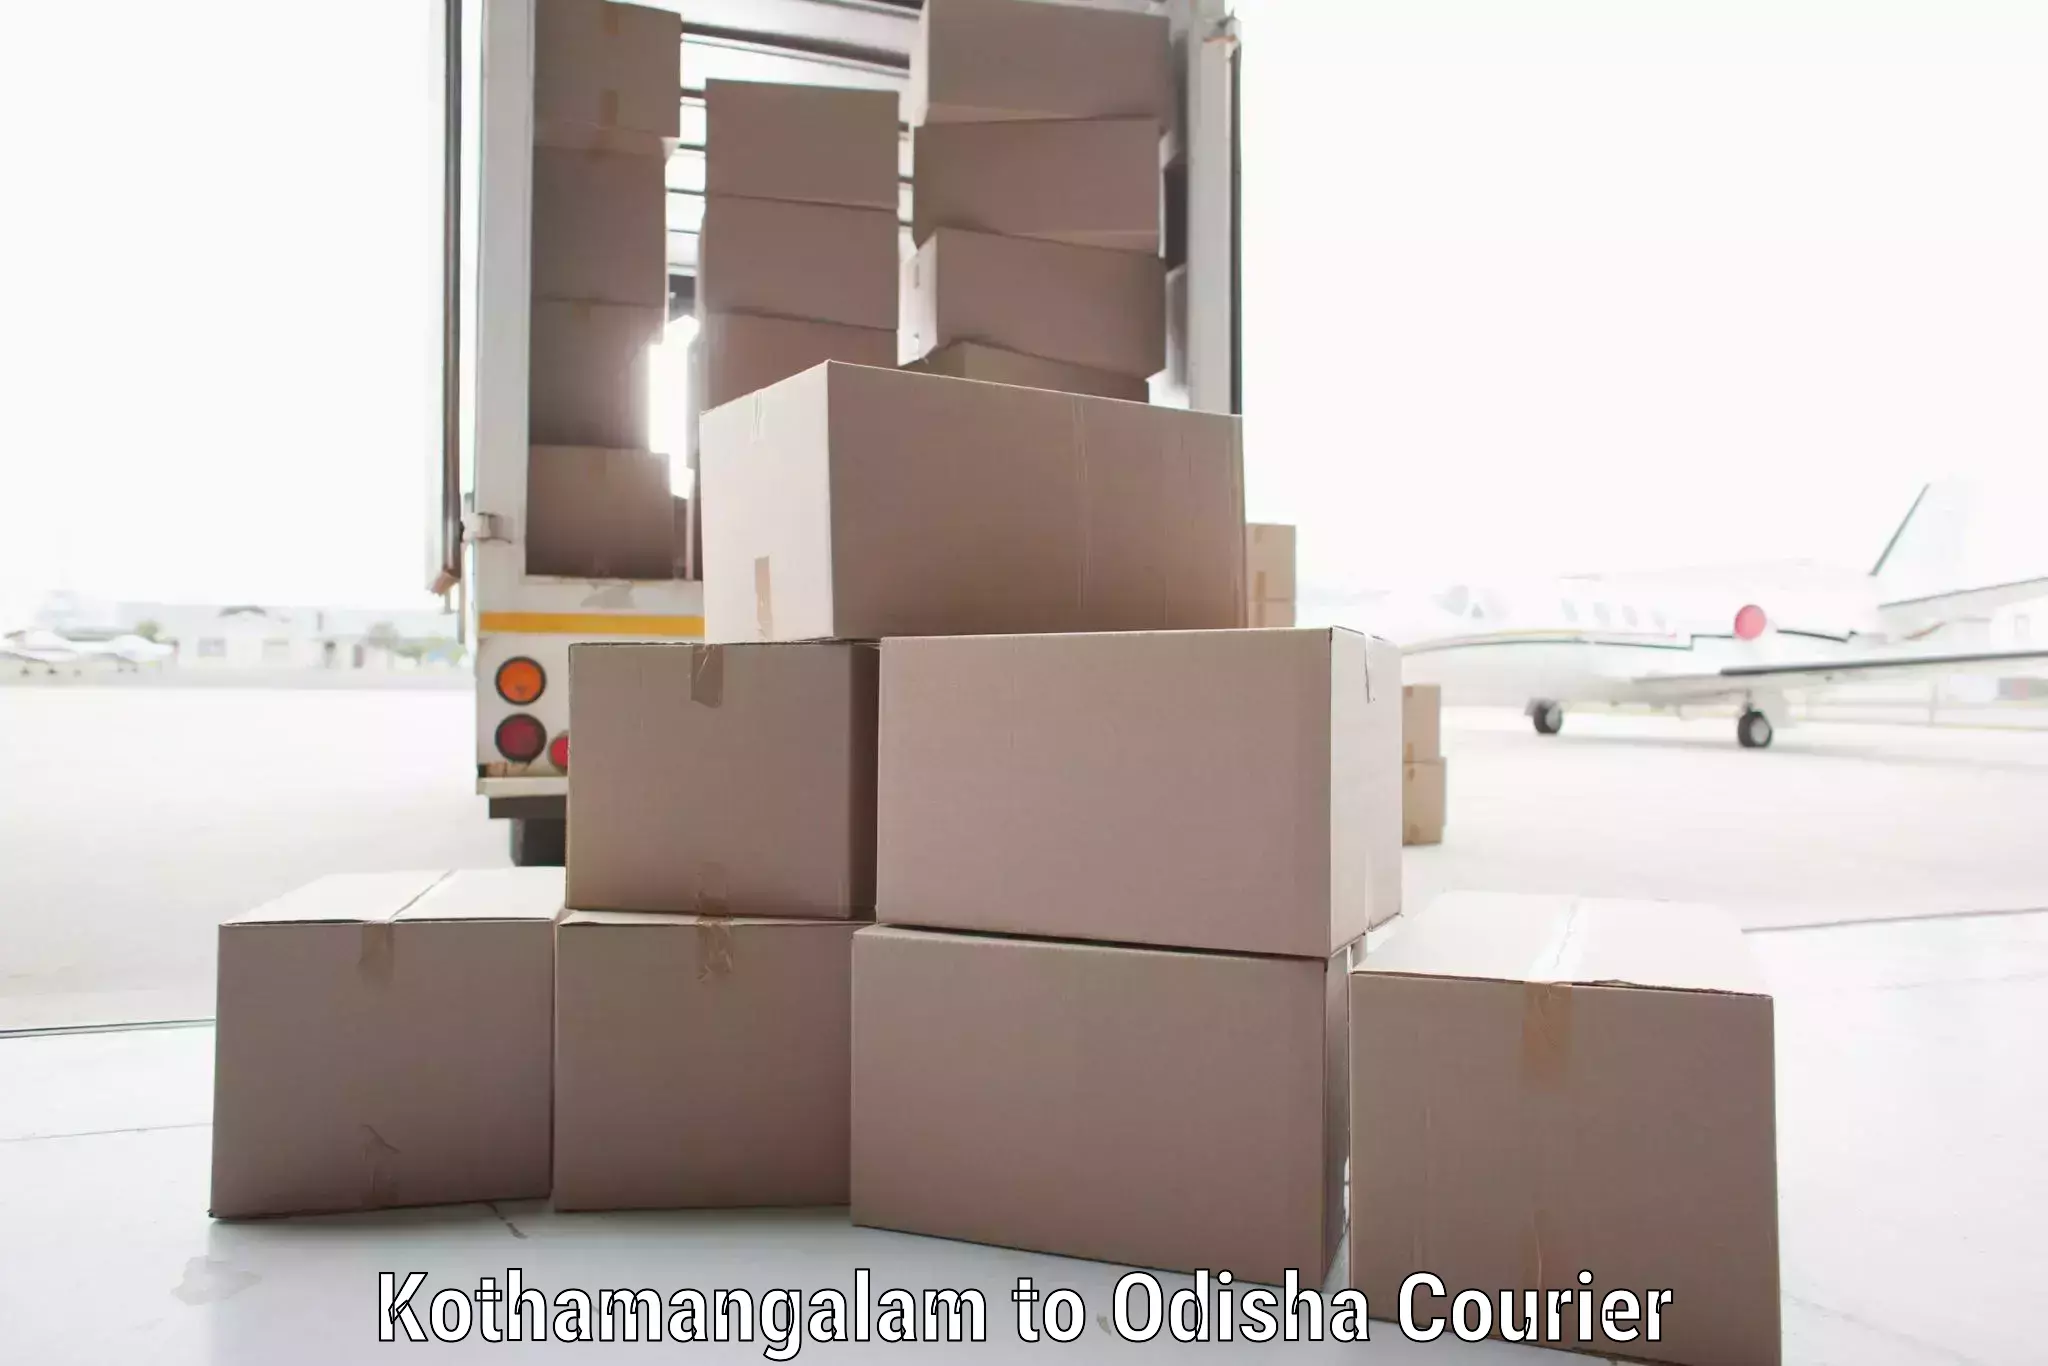 Express courier capabilities in Kothamangalam to Kotapad